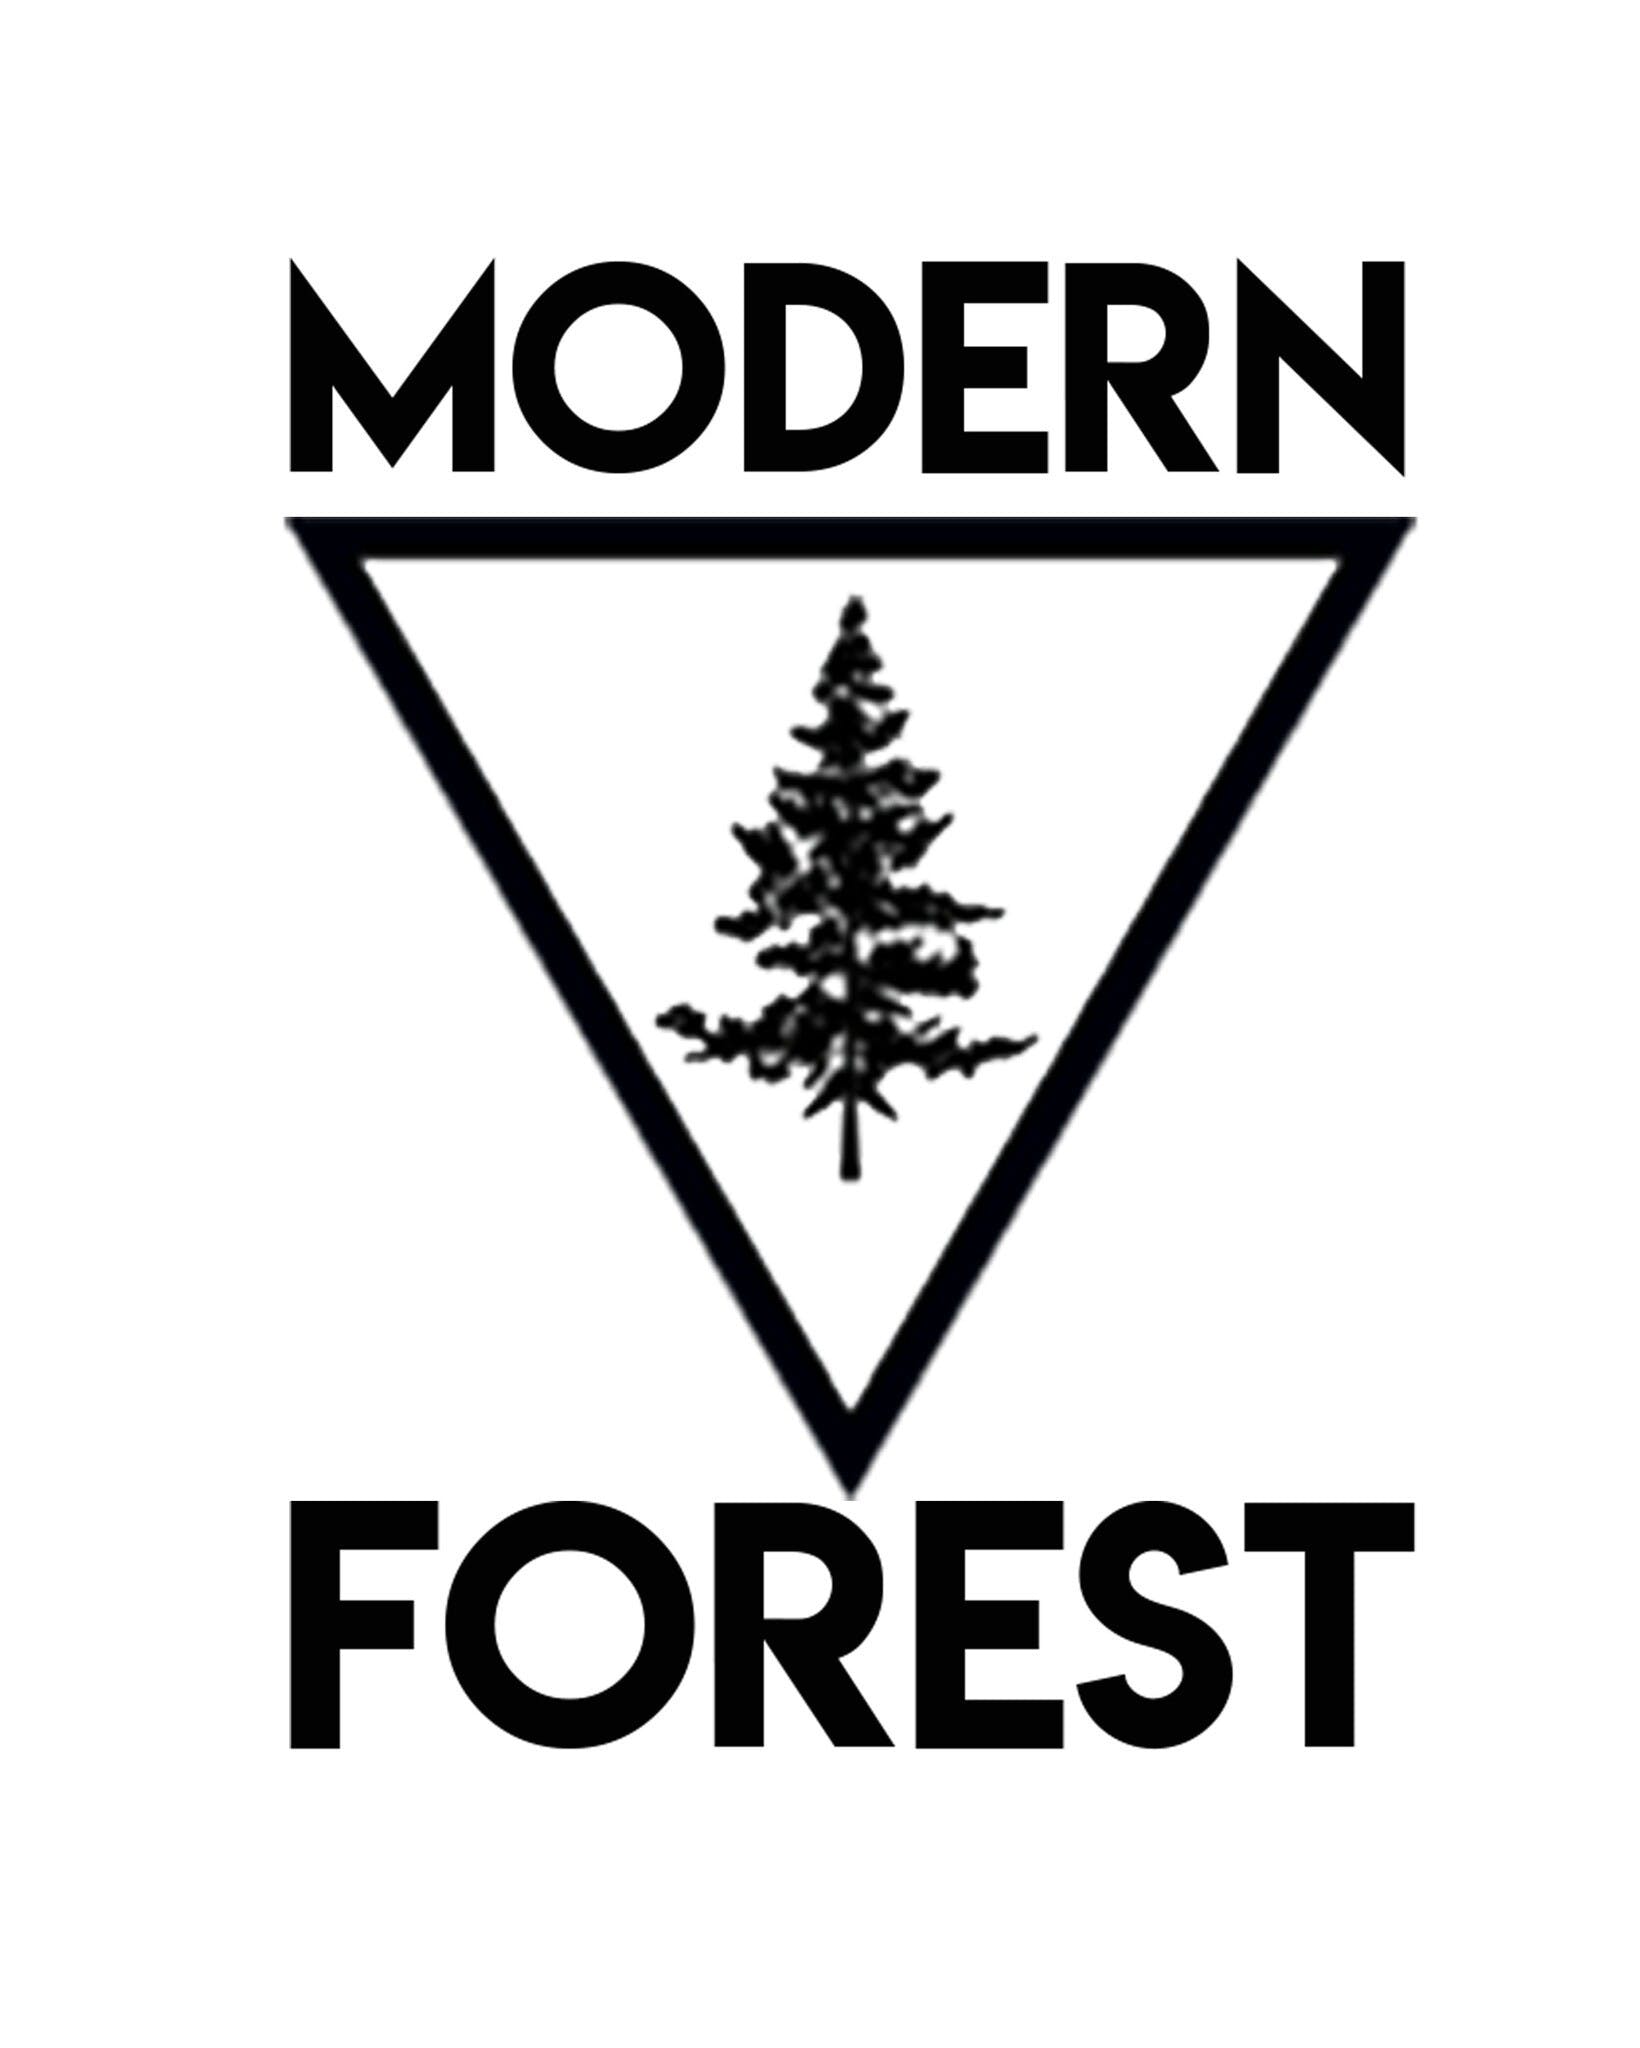 Modern Forest - Medical Marijuana Doctors - Cannabizme.com